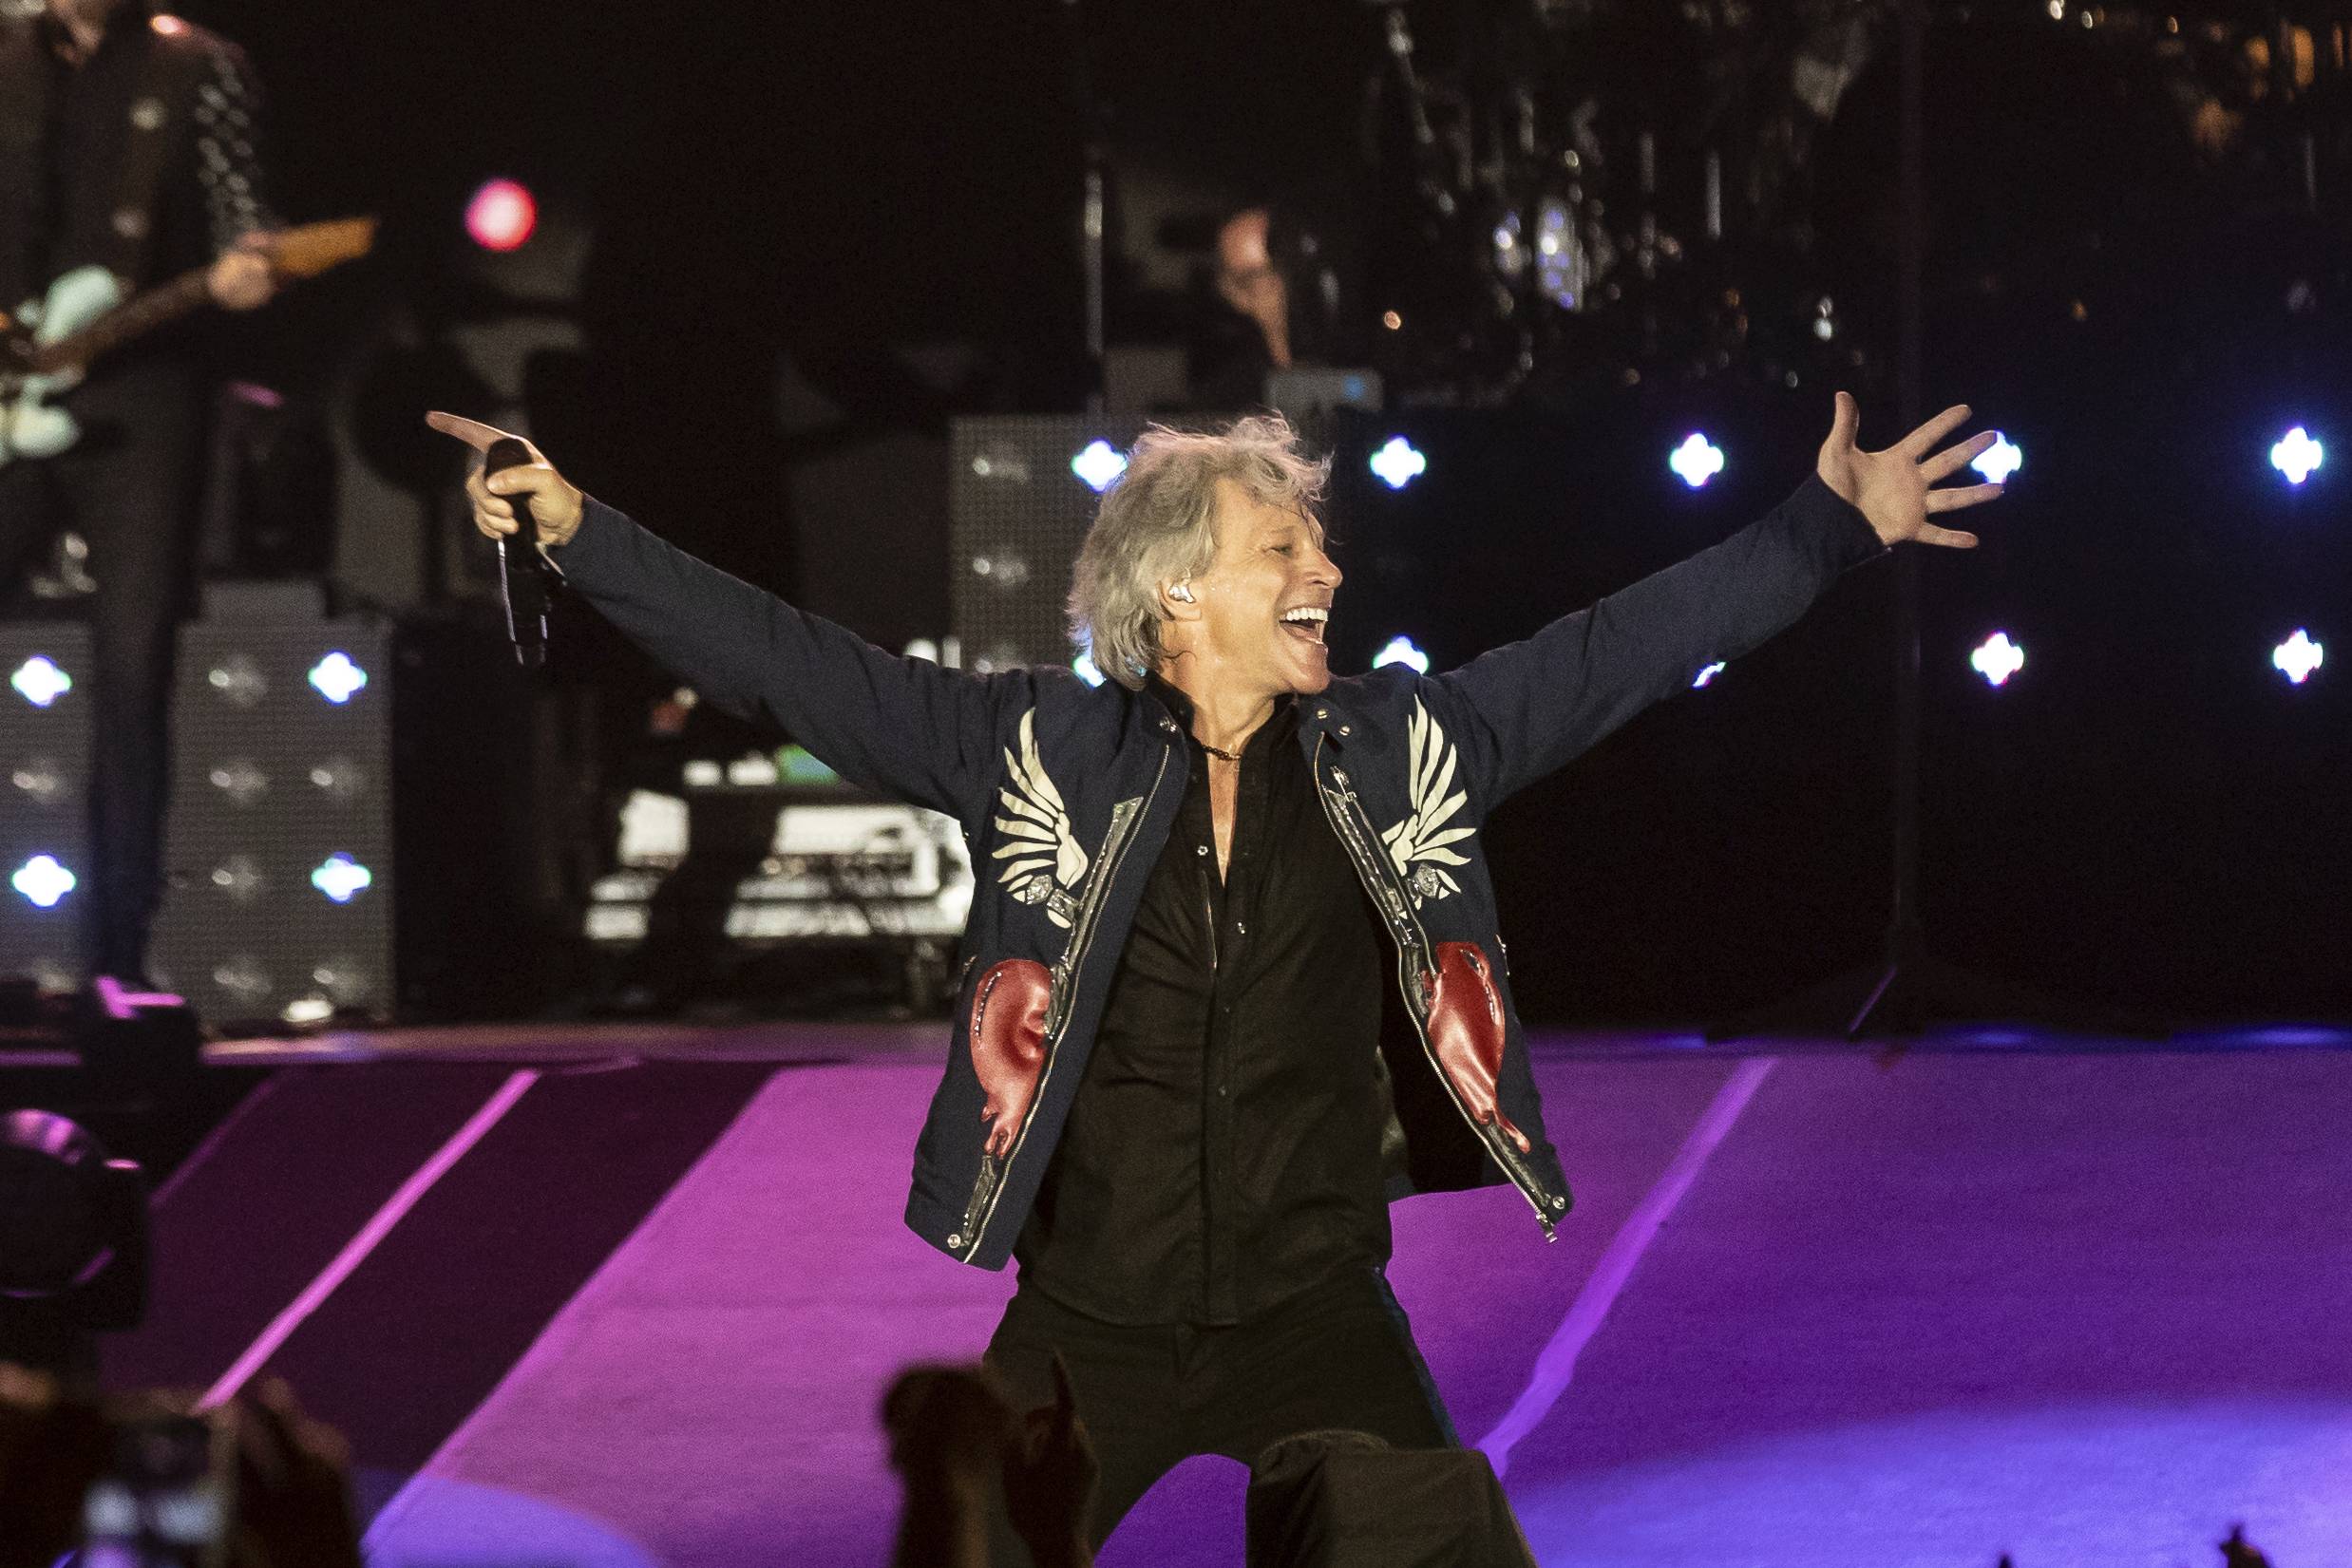 Jon Bon Jovi performs on stage